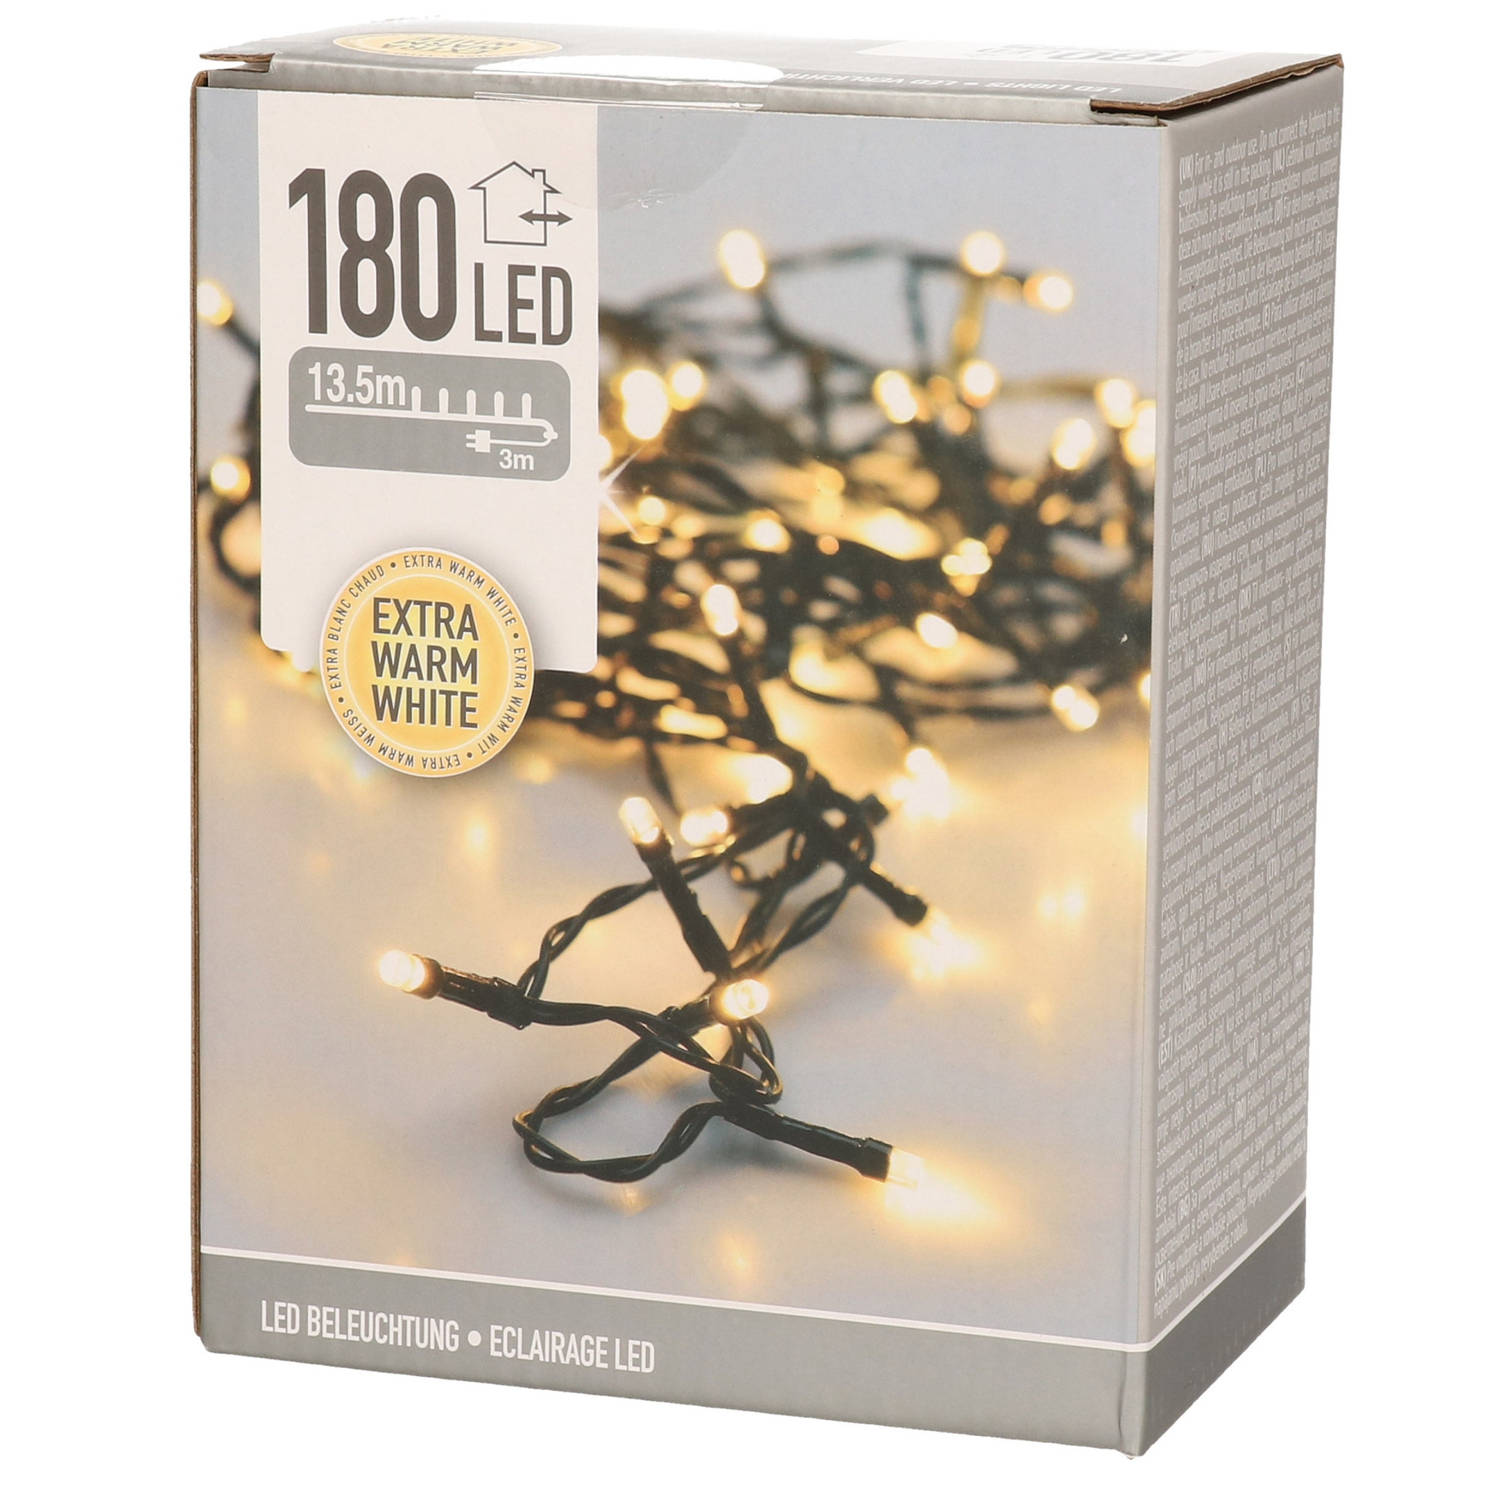 Kerstverlichting Extra Warm Wit Buiten 180 Lampjes Kerstlampjes-Kerstlichtjes